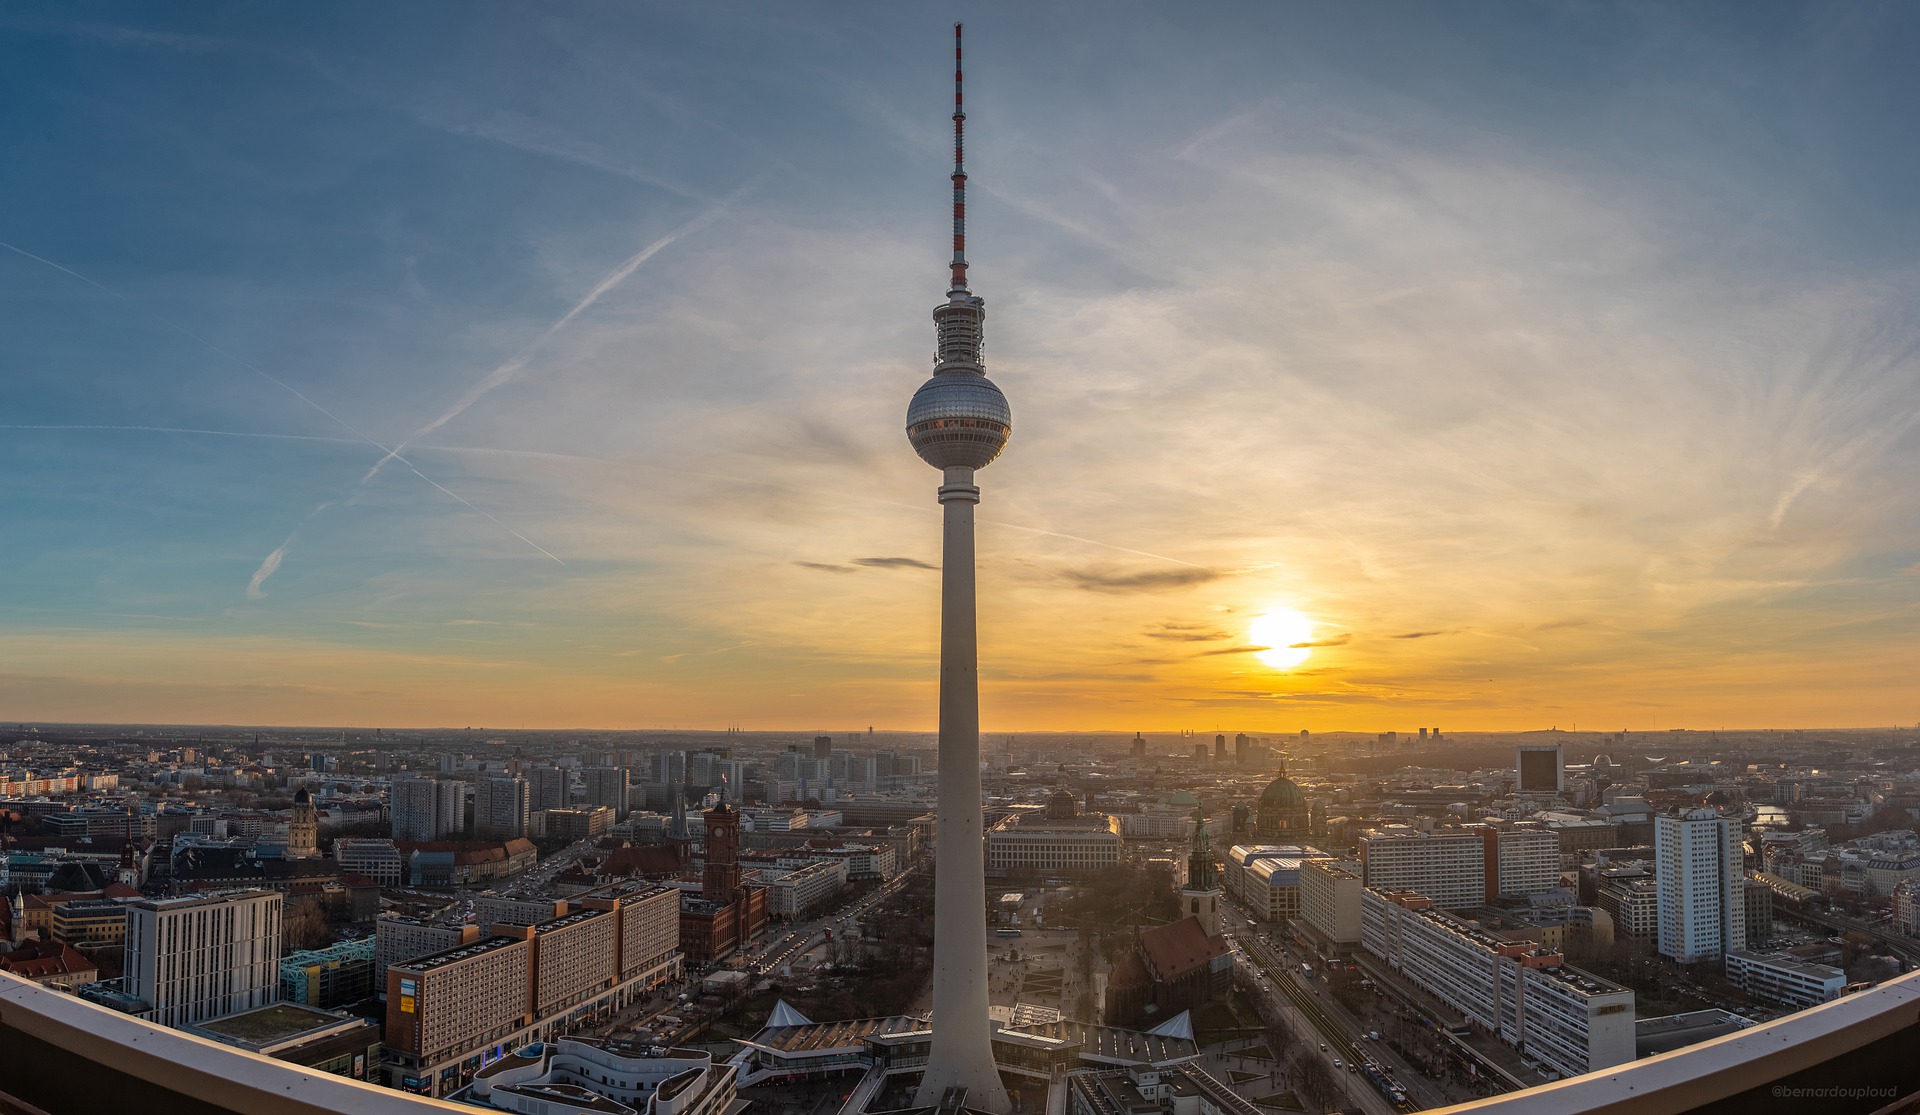 Berlin TV tower Image by Bernardo Ferreria from Pixabay